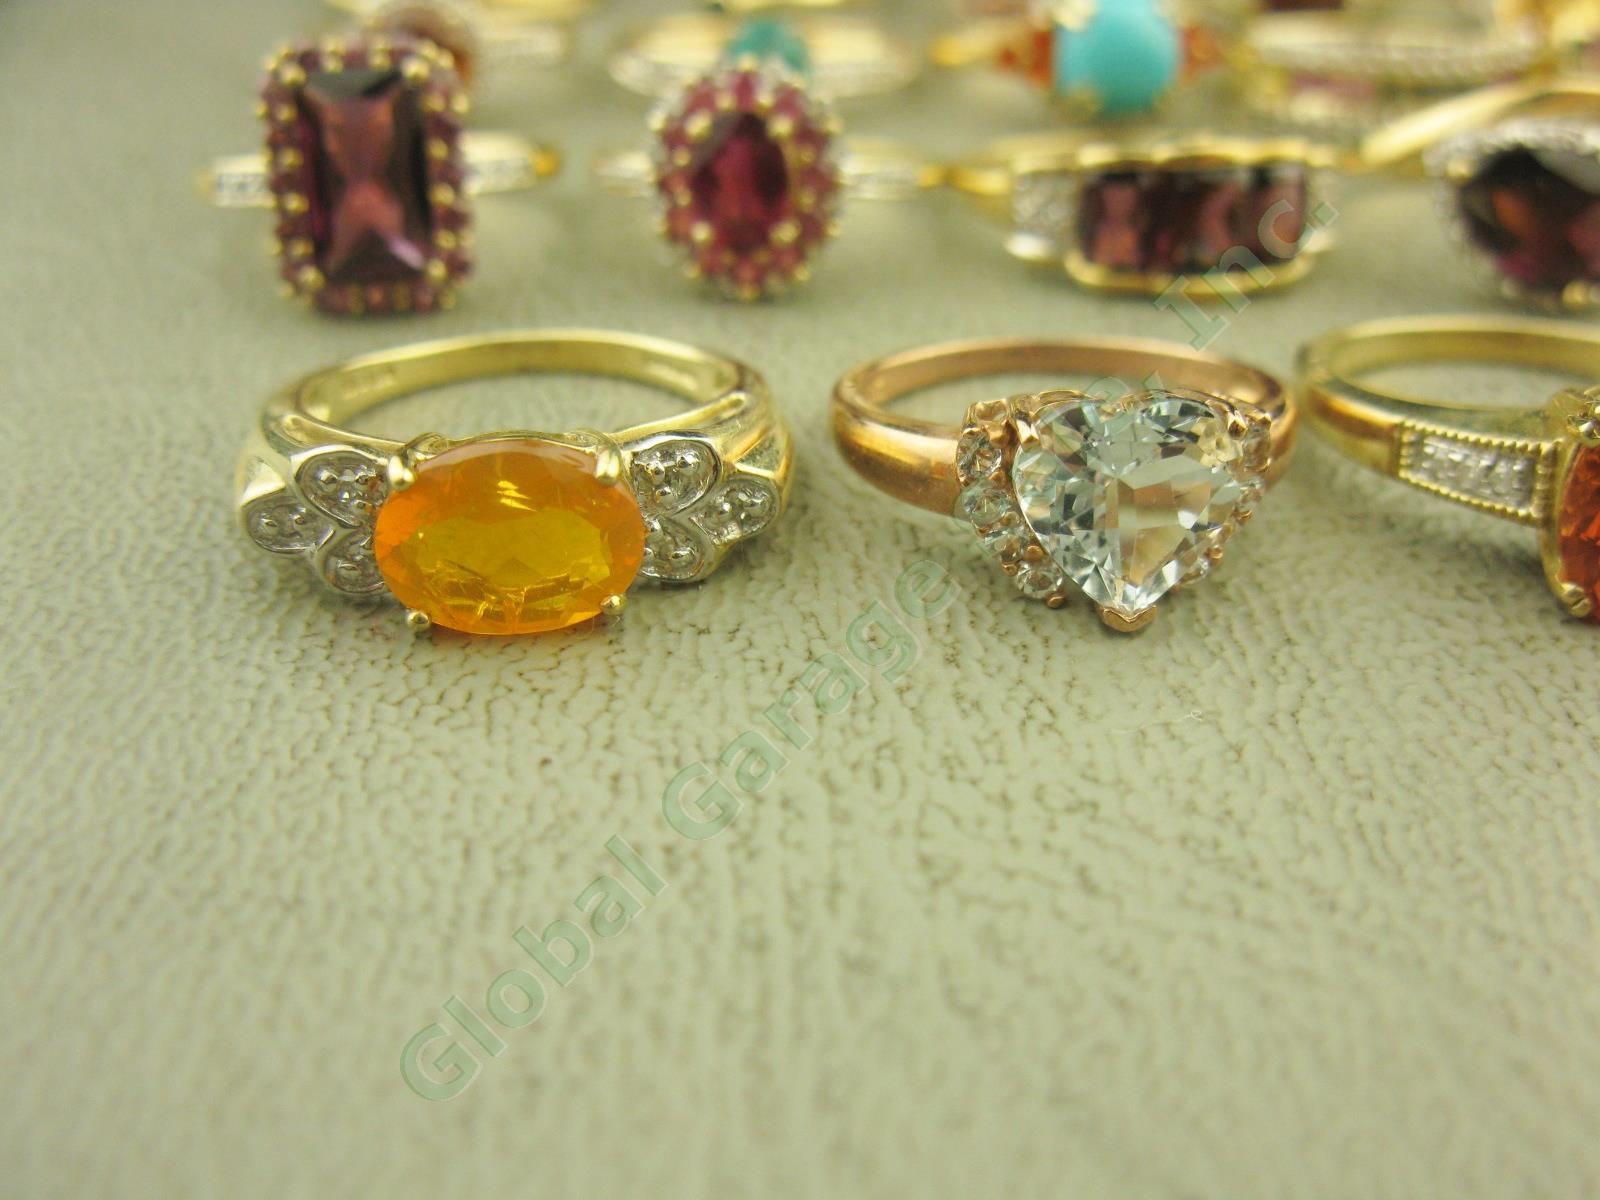 19x 14k 10k Gold Gemstone Rings Lot Earrings 57.7 Grams Not Scrap $1200+ Value!! 1